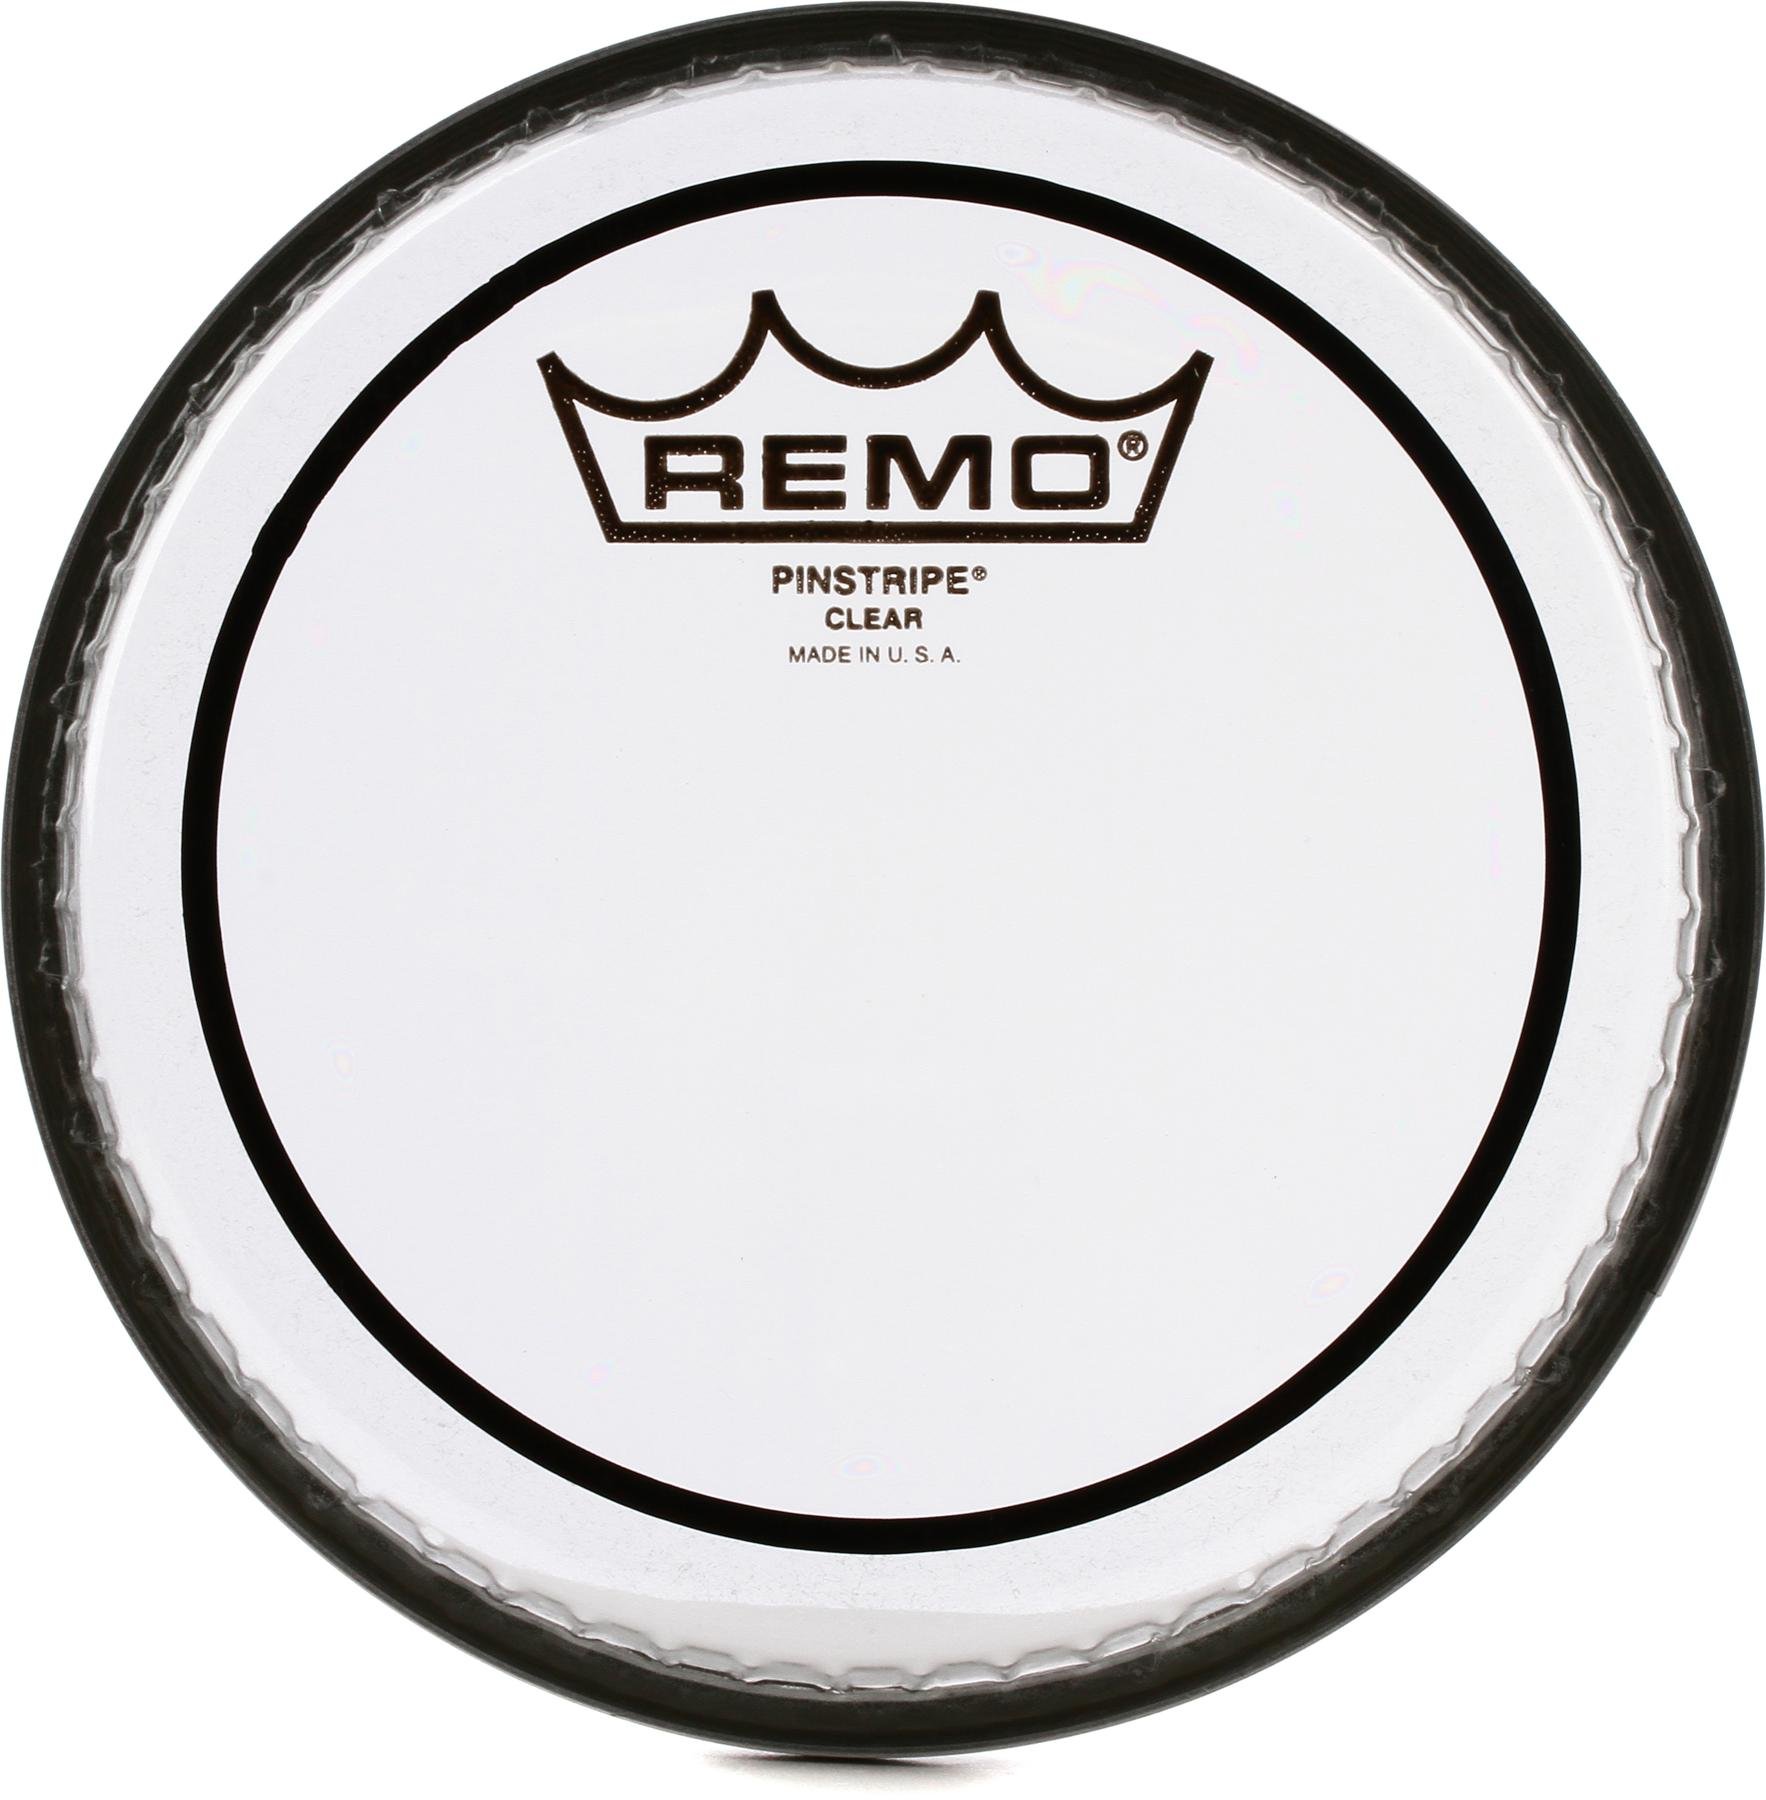 remo drum heads